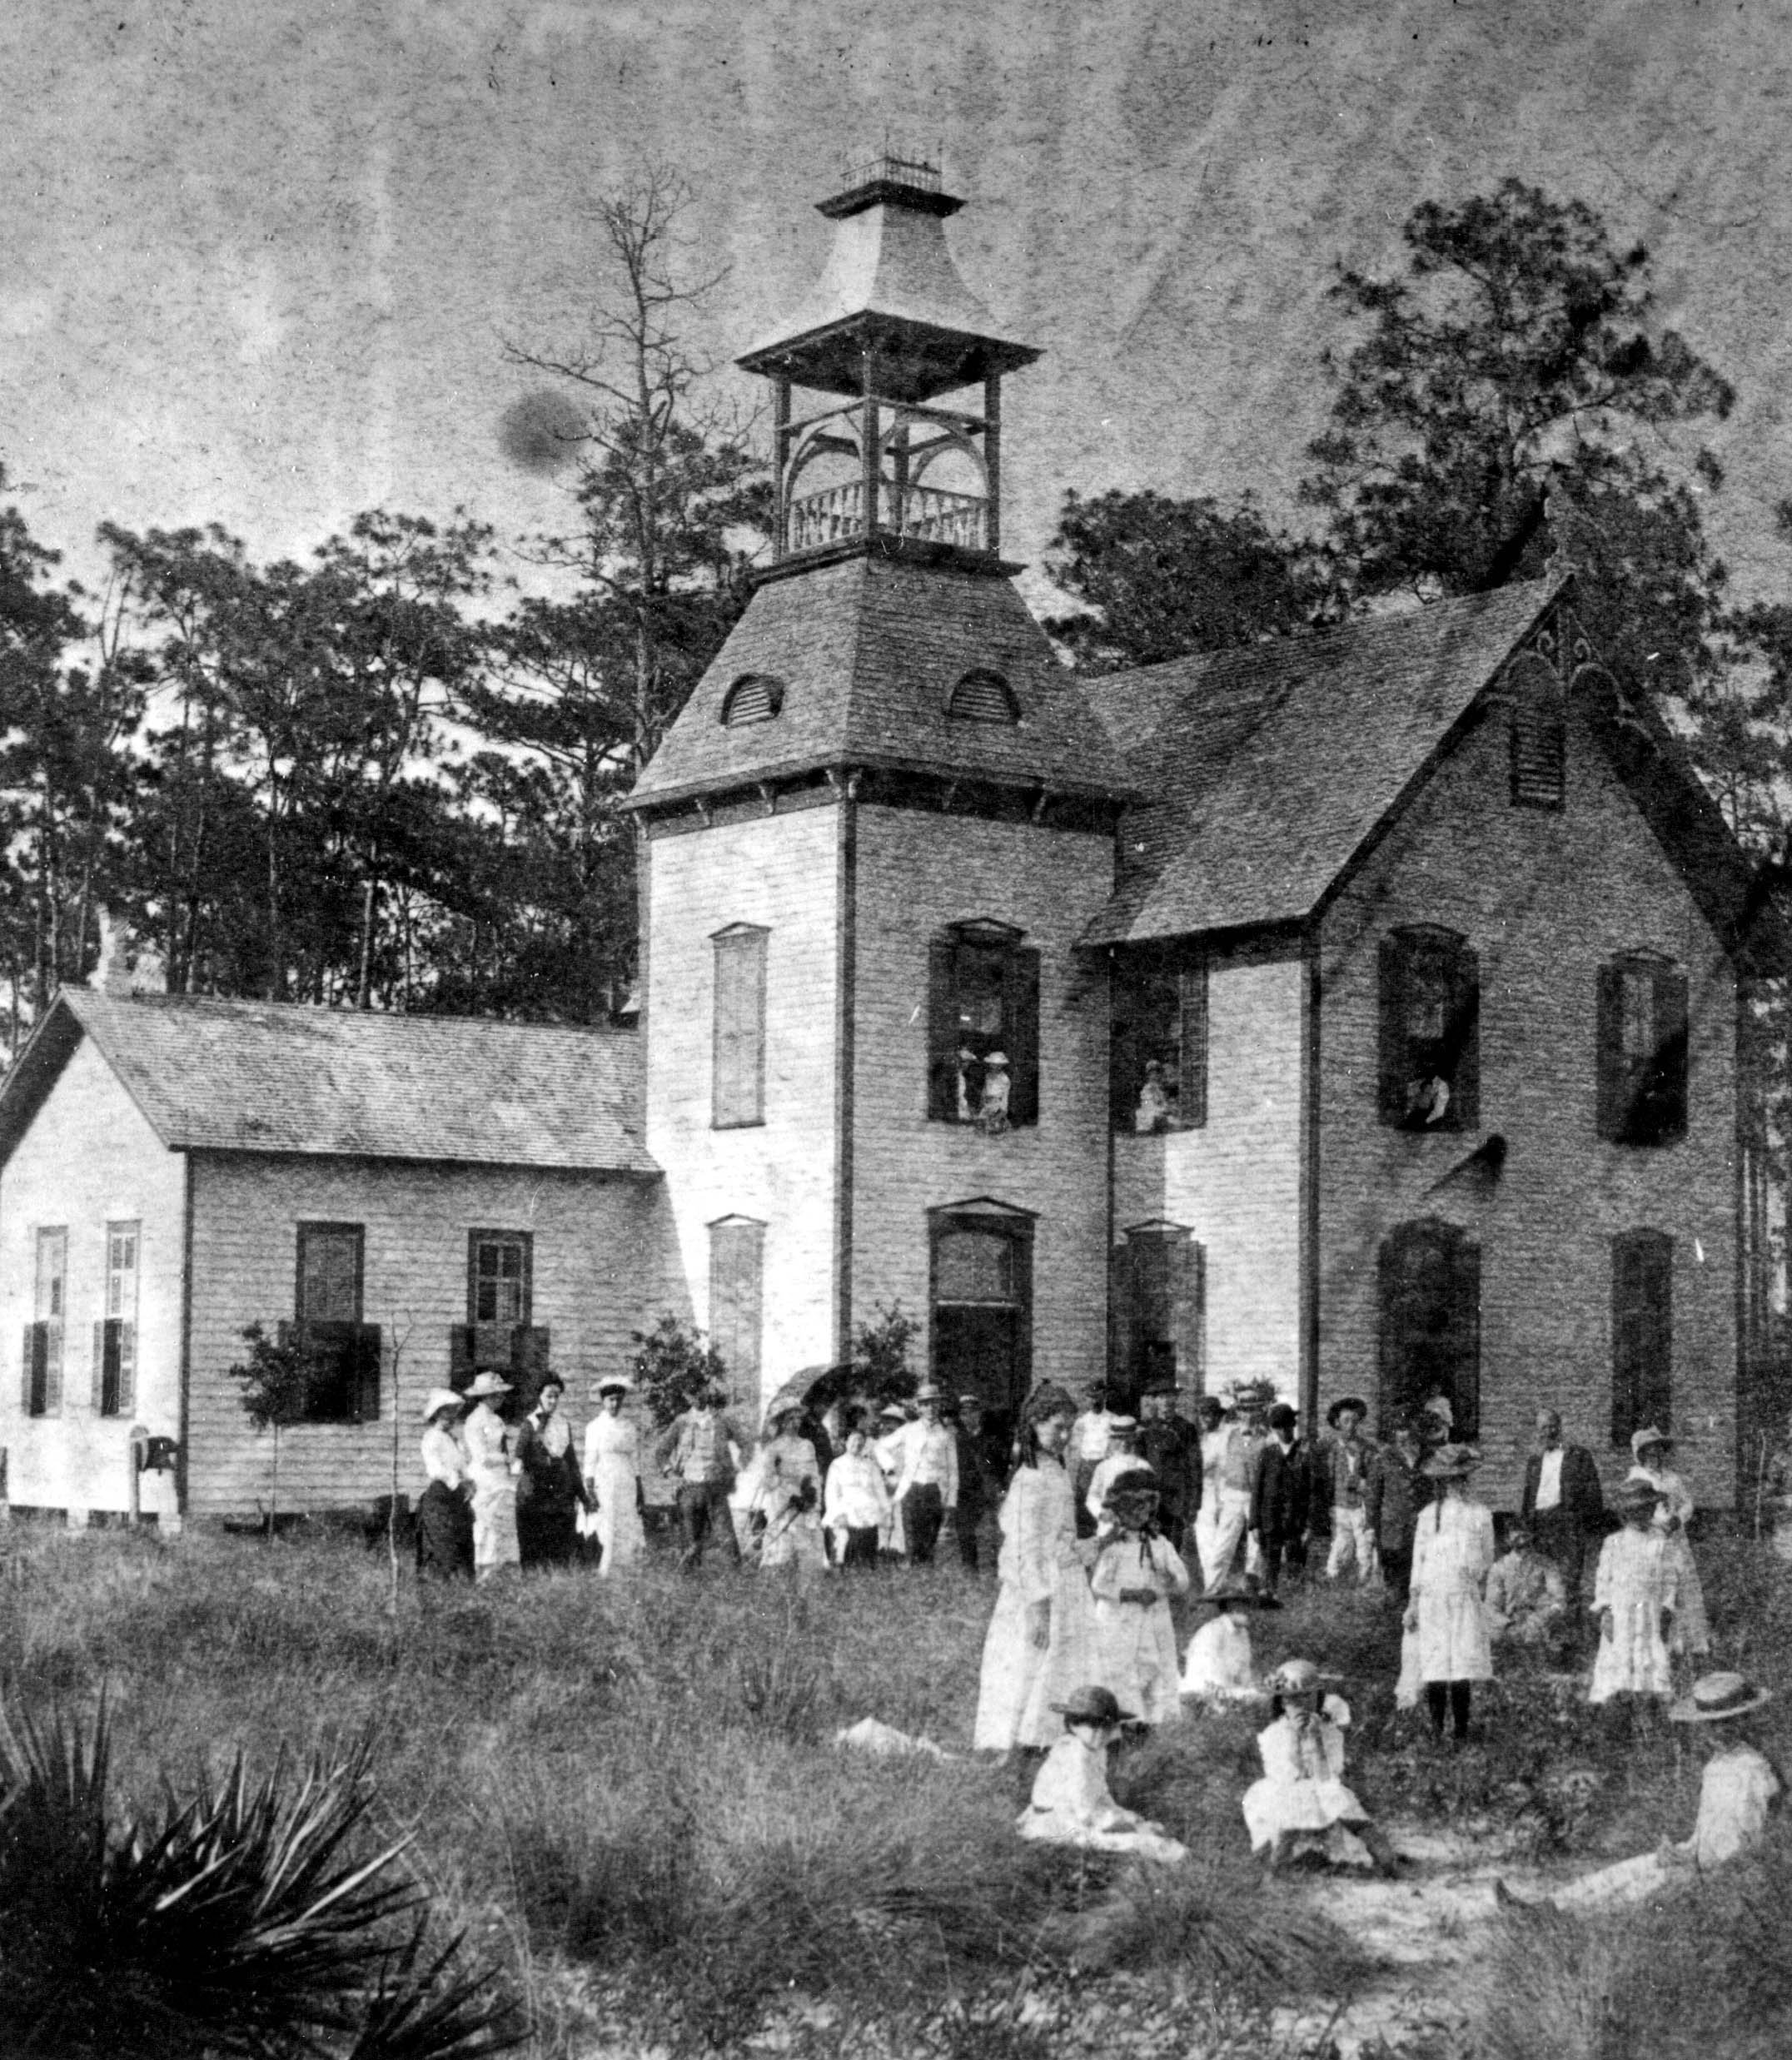 Orange City School, c. 188-. Source: Photo by M.M. & W.H. Gardner, State Archives of Florida, Florida Memory. 

